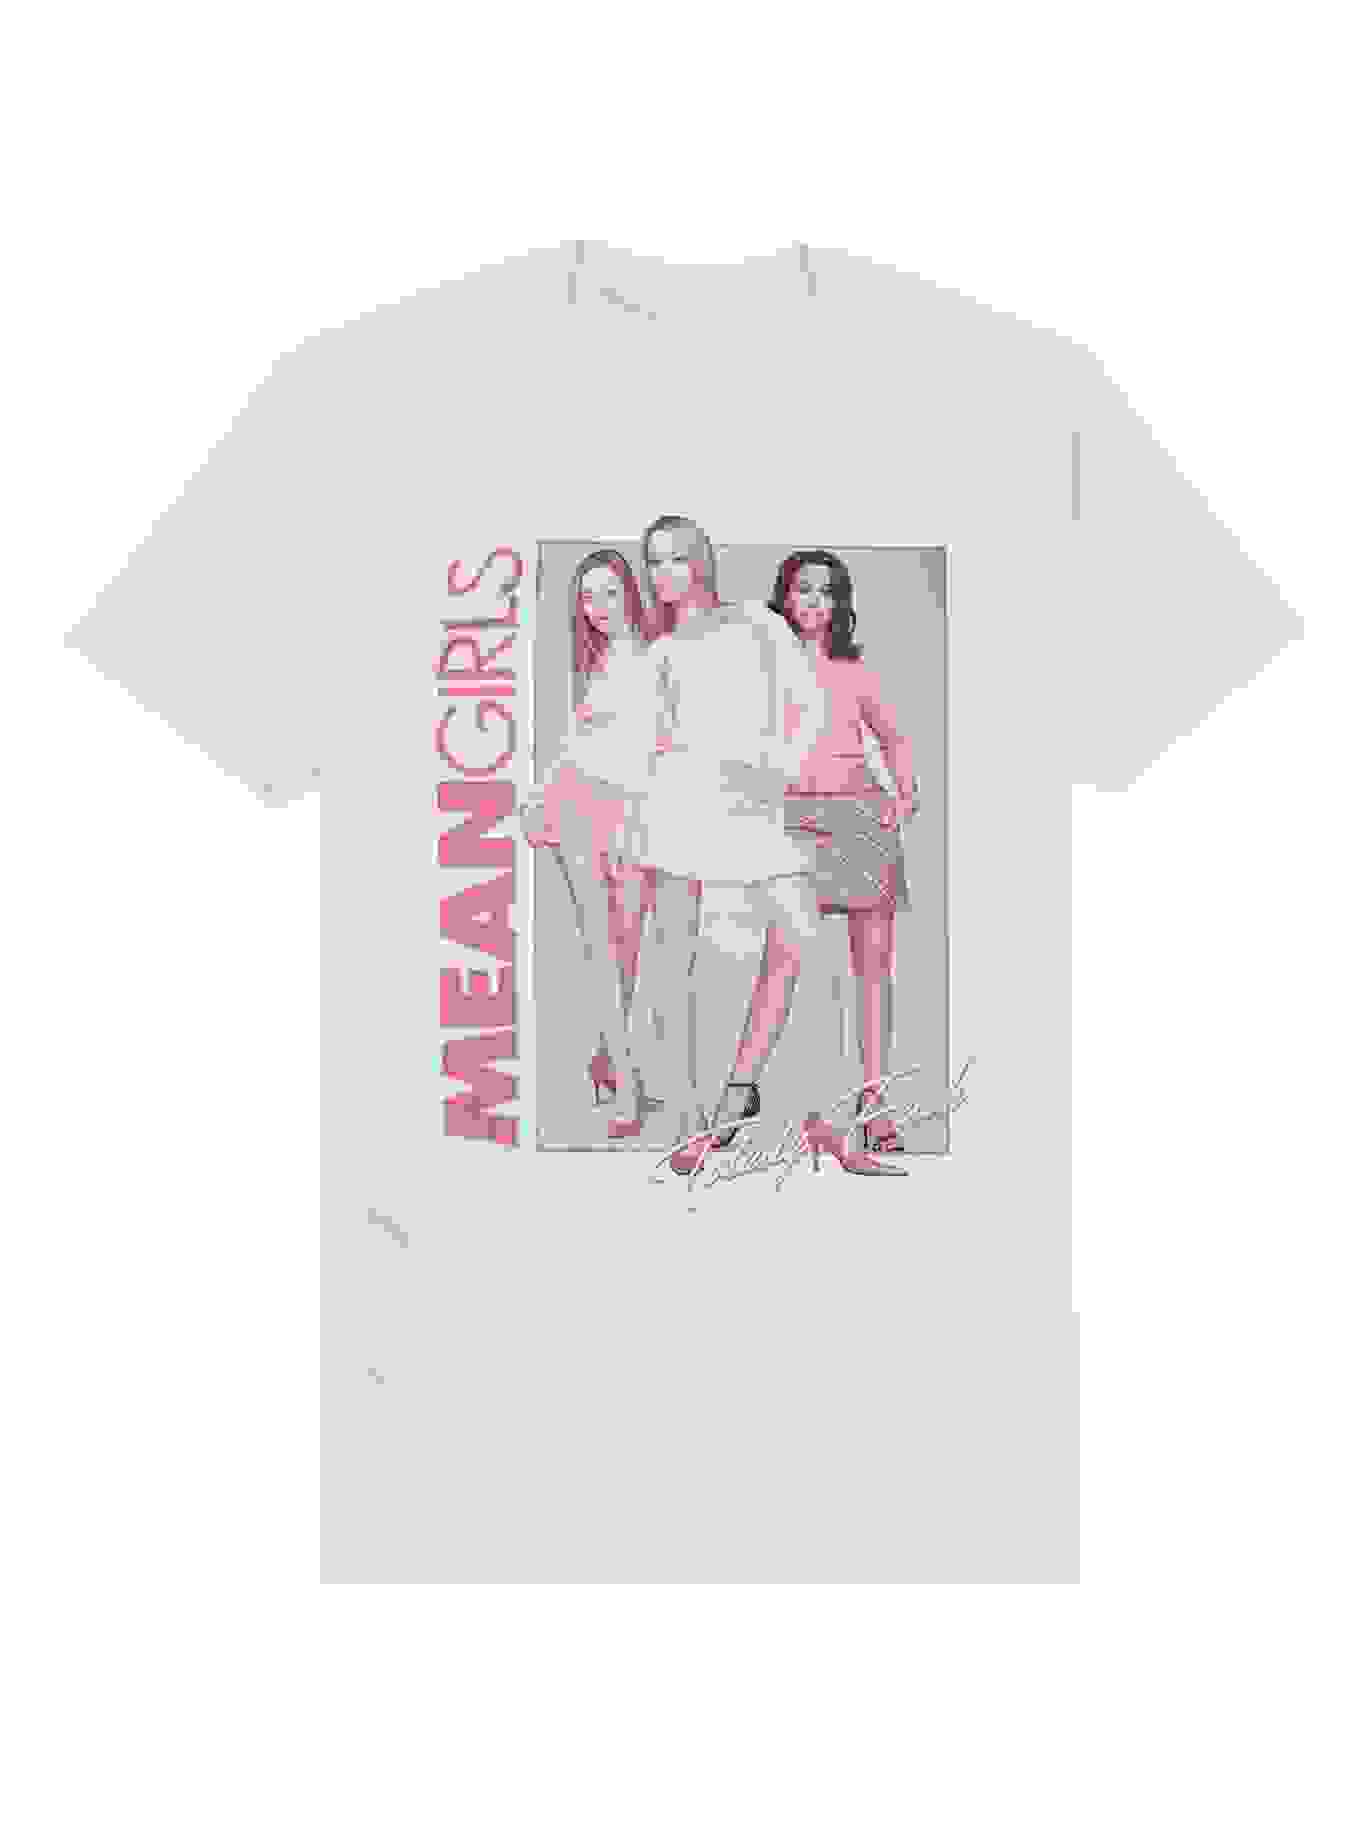 OFFICIAL Mean Girls Shirts & Merchandise